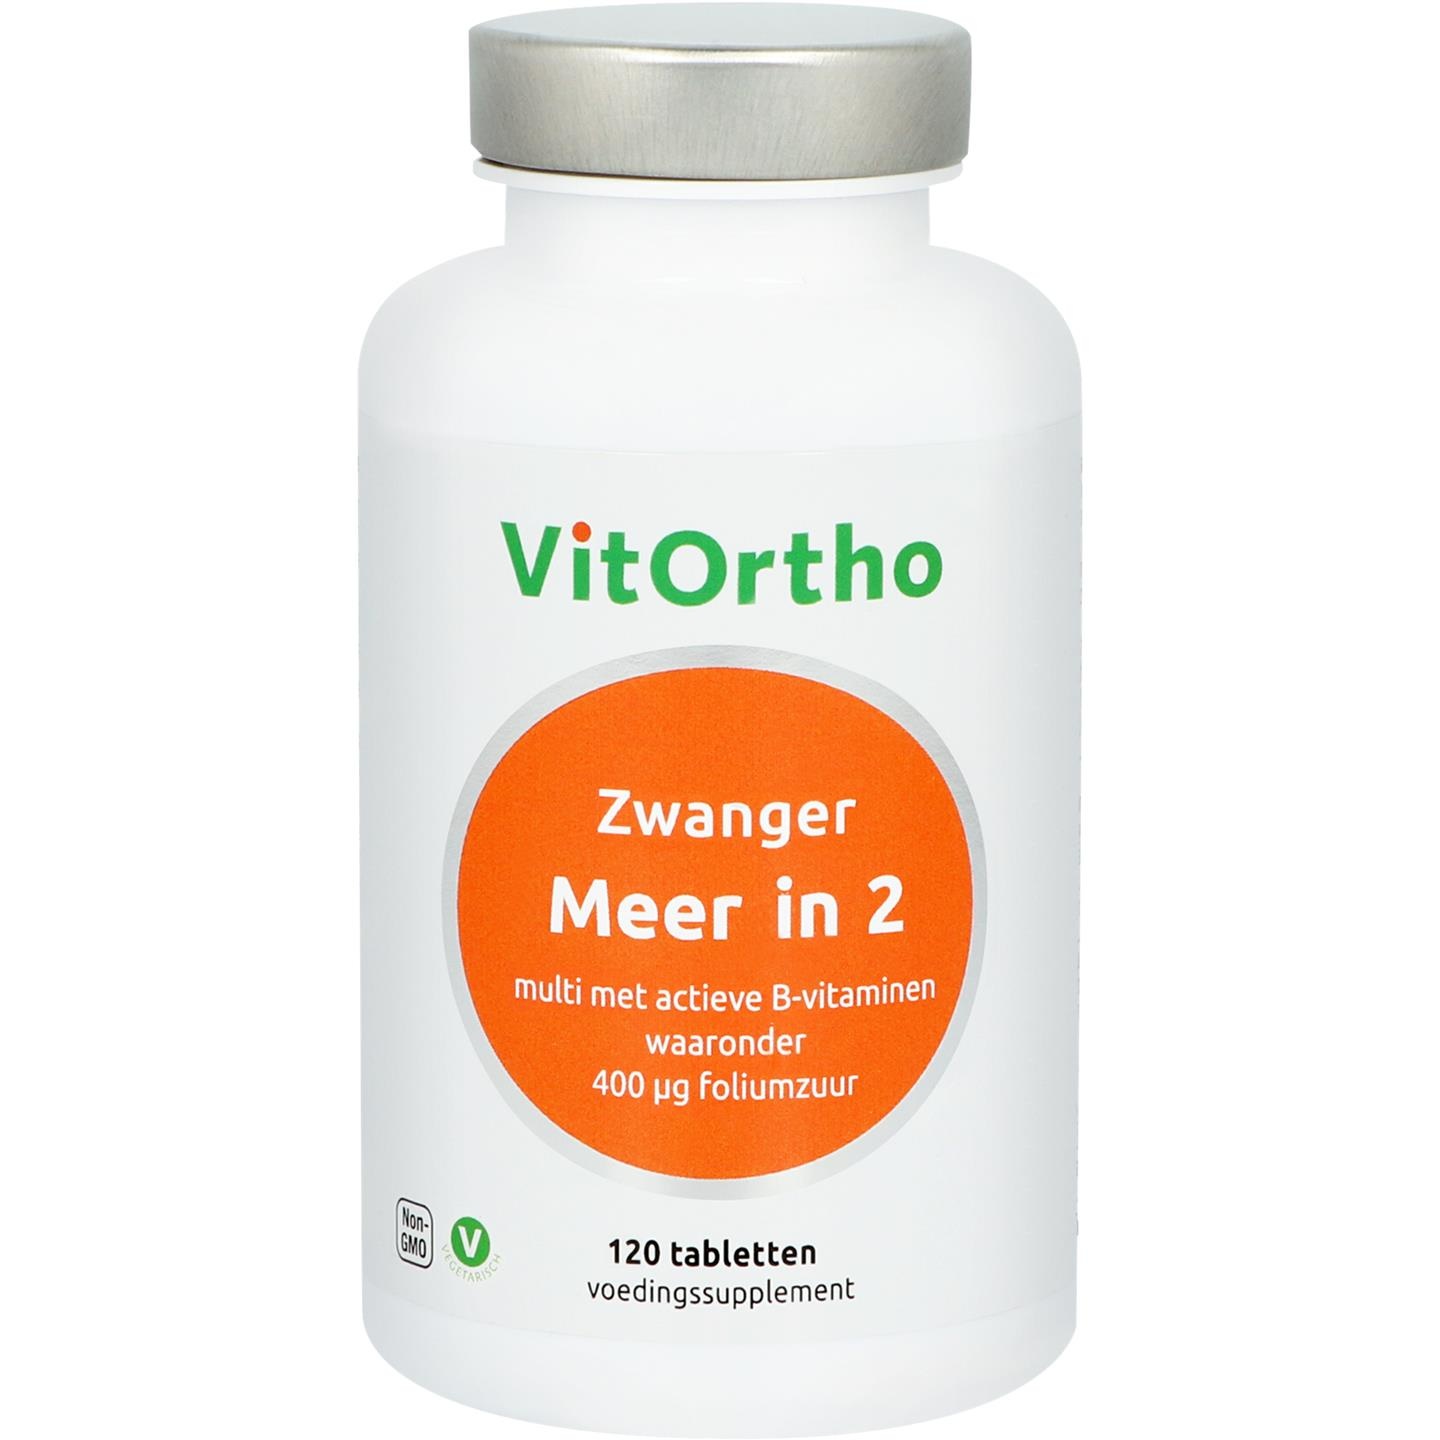 Vitortho VitOrtho Mehr in 2 Schwangere (120 Tabletten)